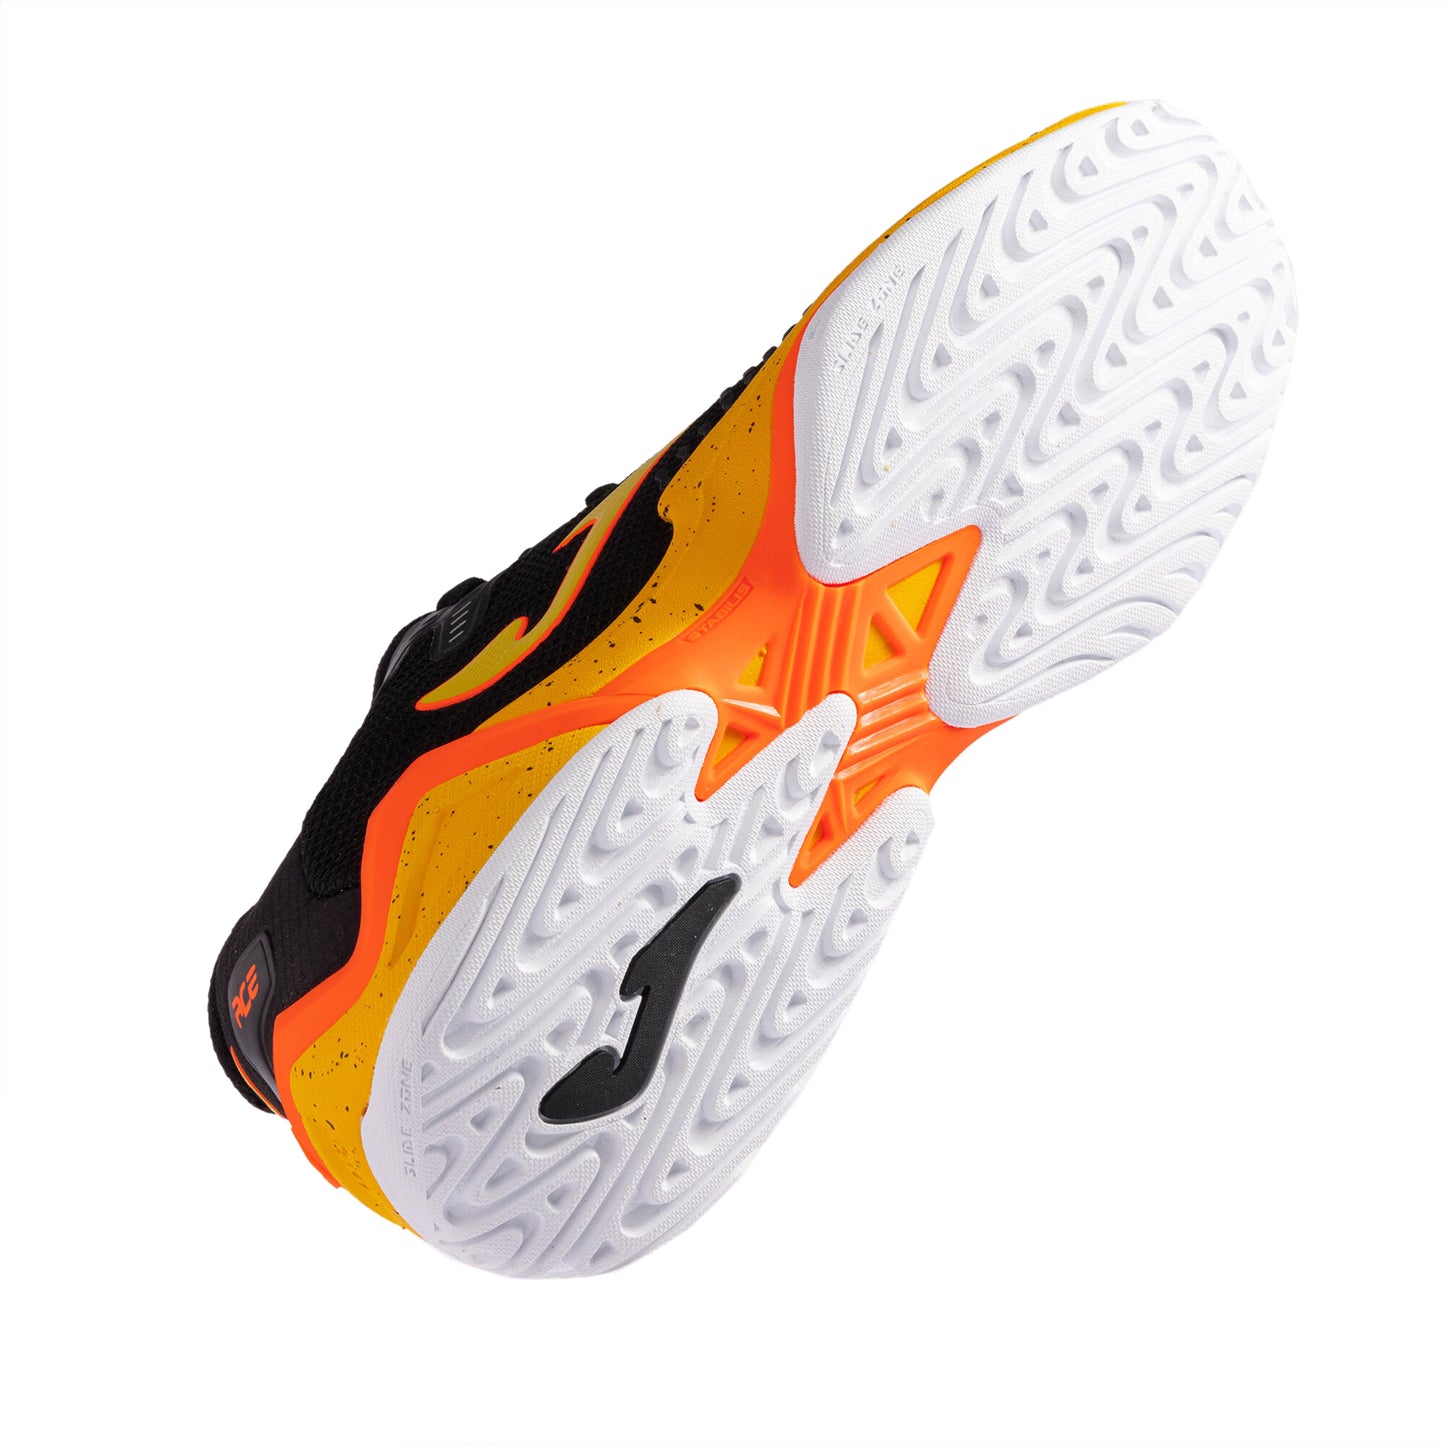 Joma T Ace 2301 Men's Tennis Shoe - Best Price online Prokicksports.com